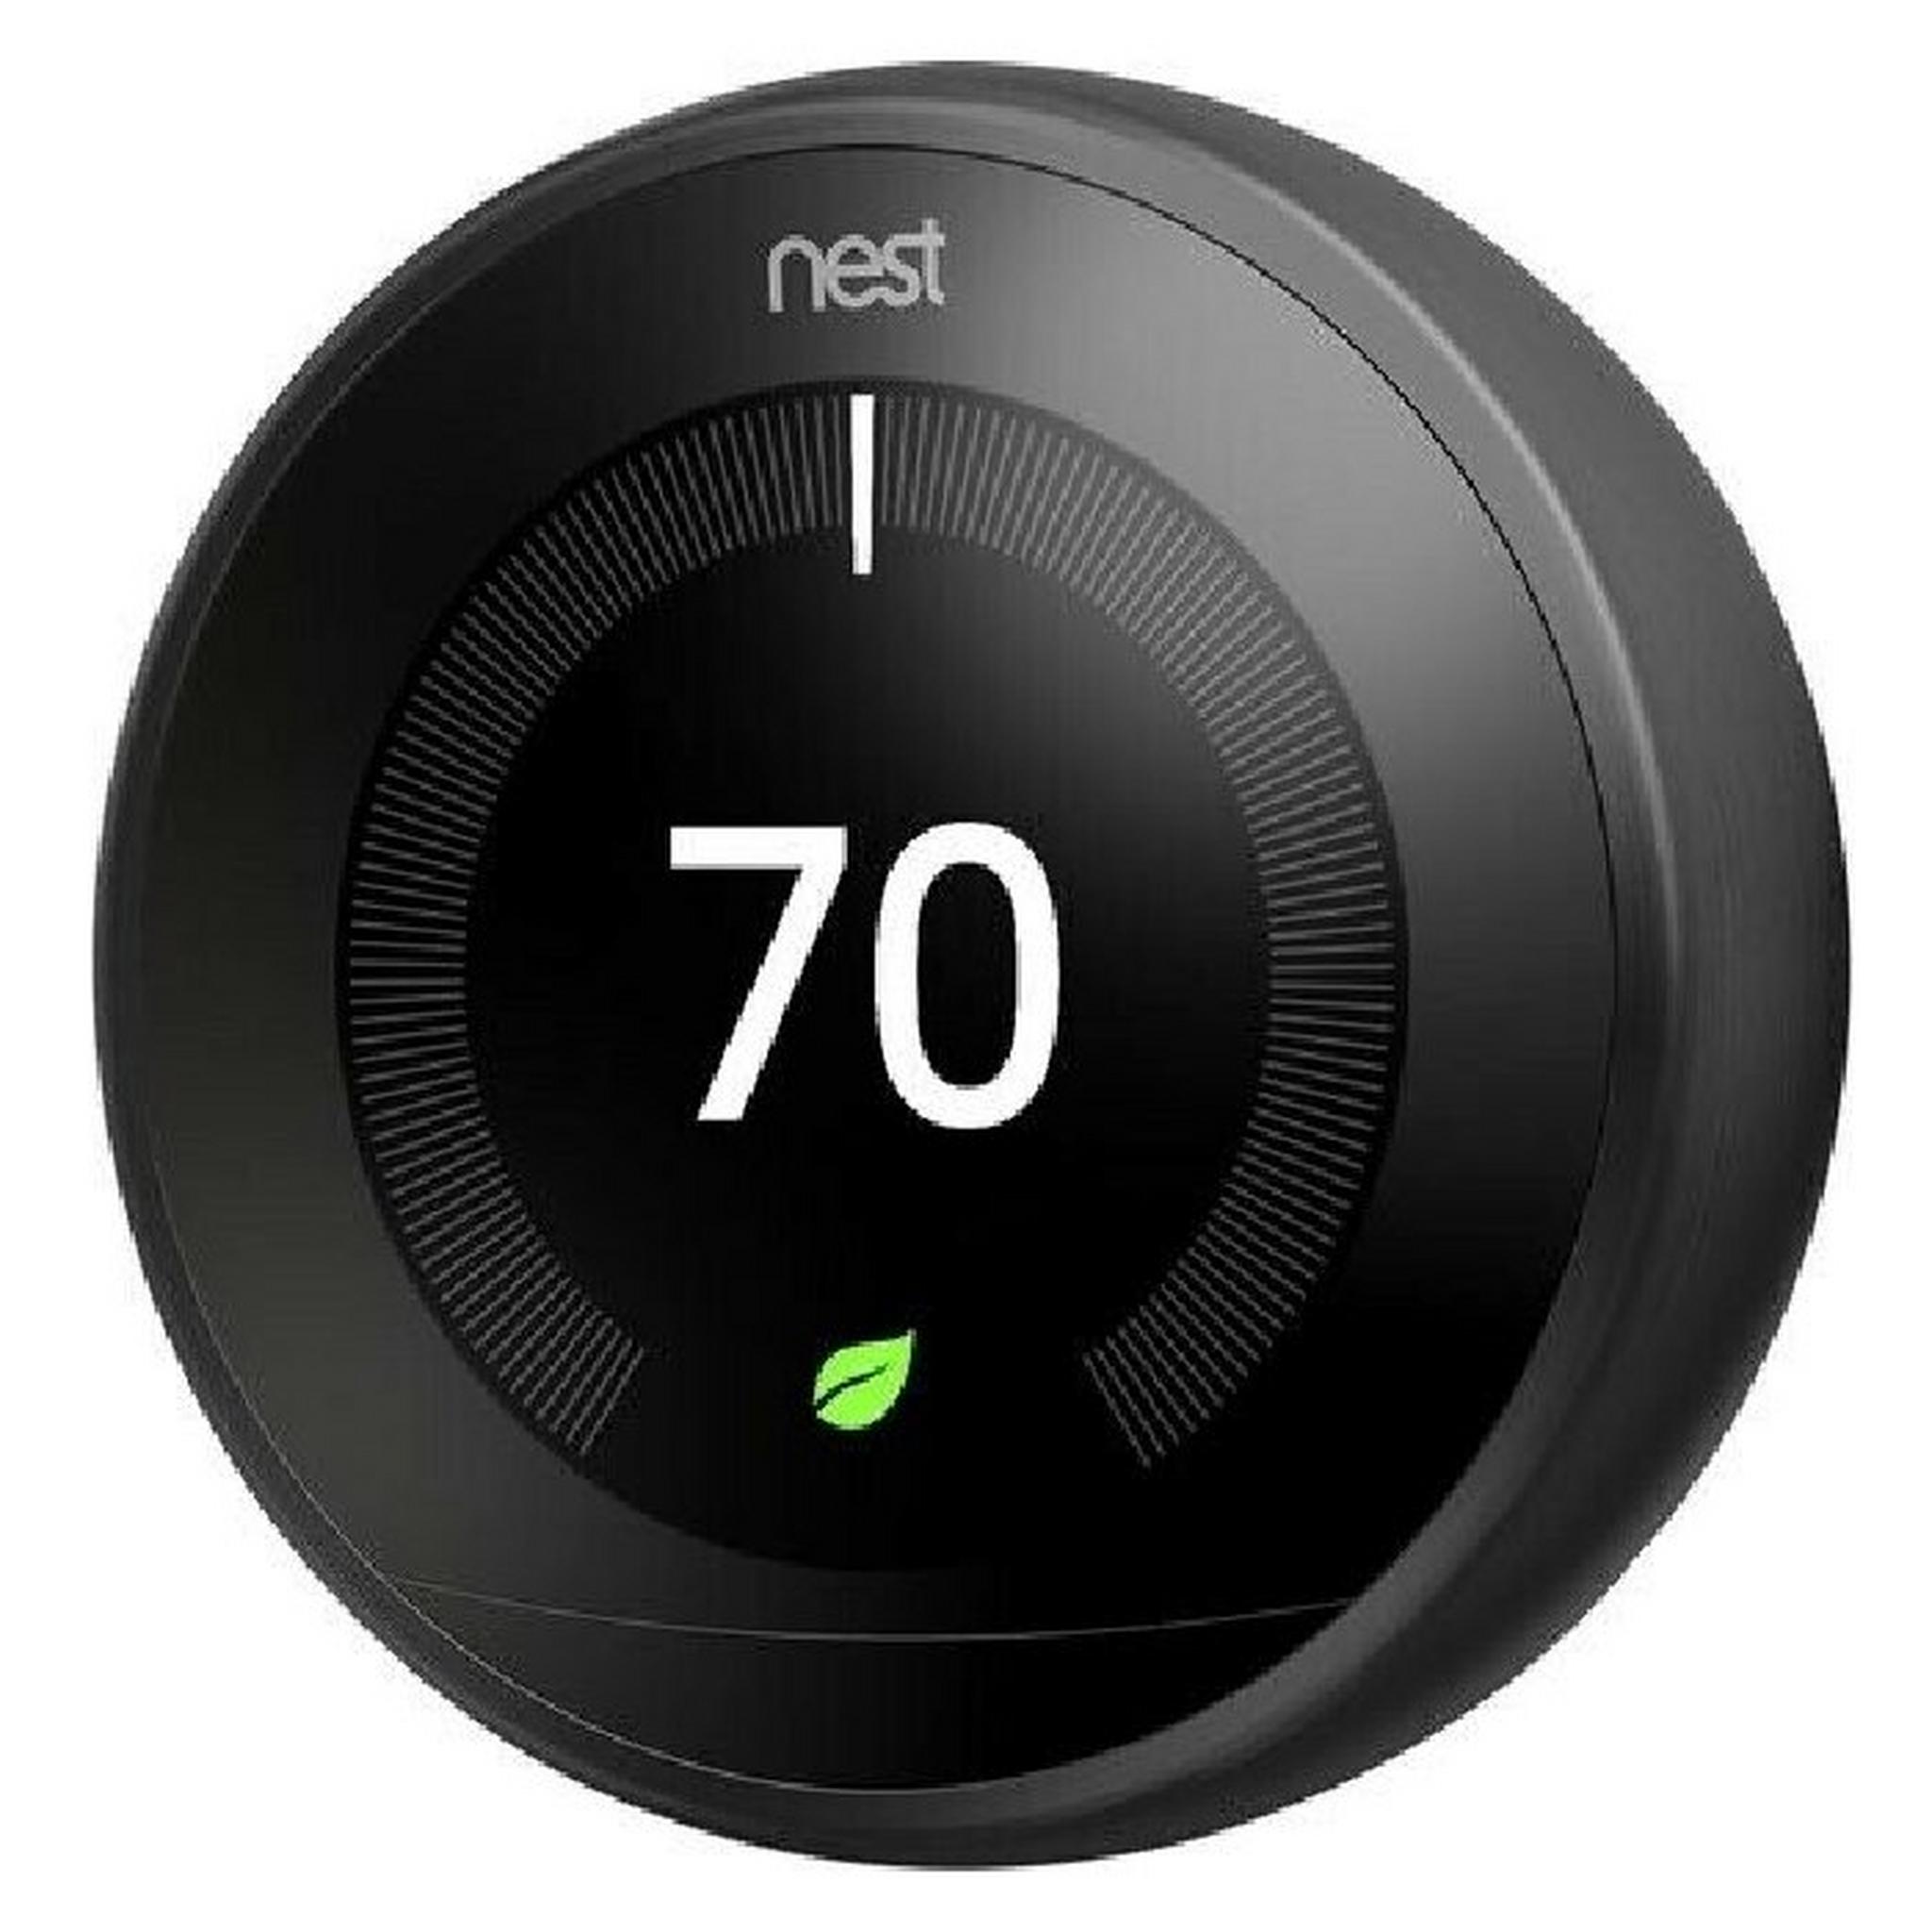 Google Nest Learning Thermostat 3rd Generation Smart Thermostat - Black